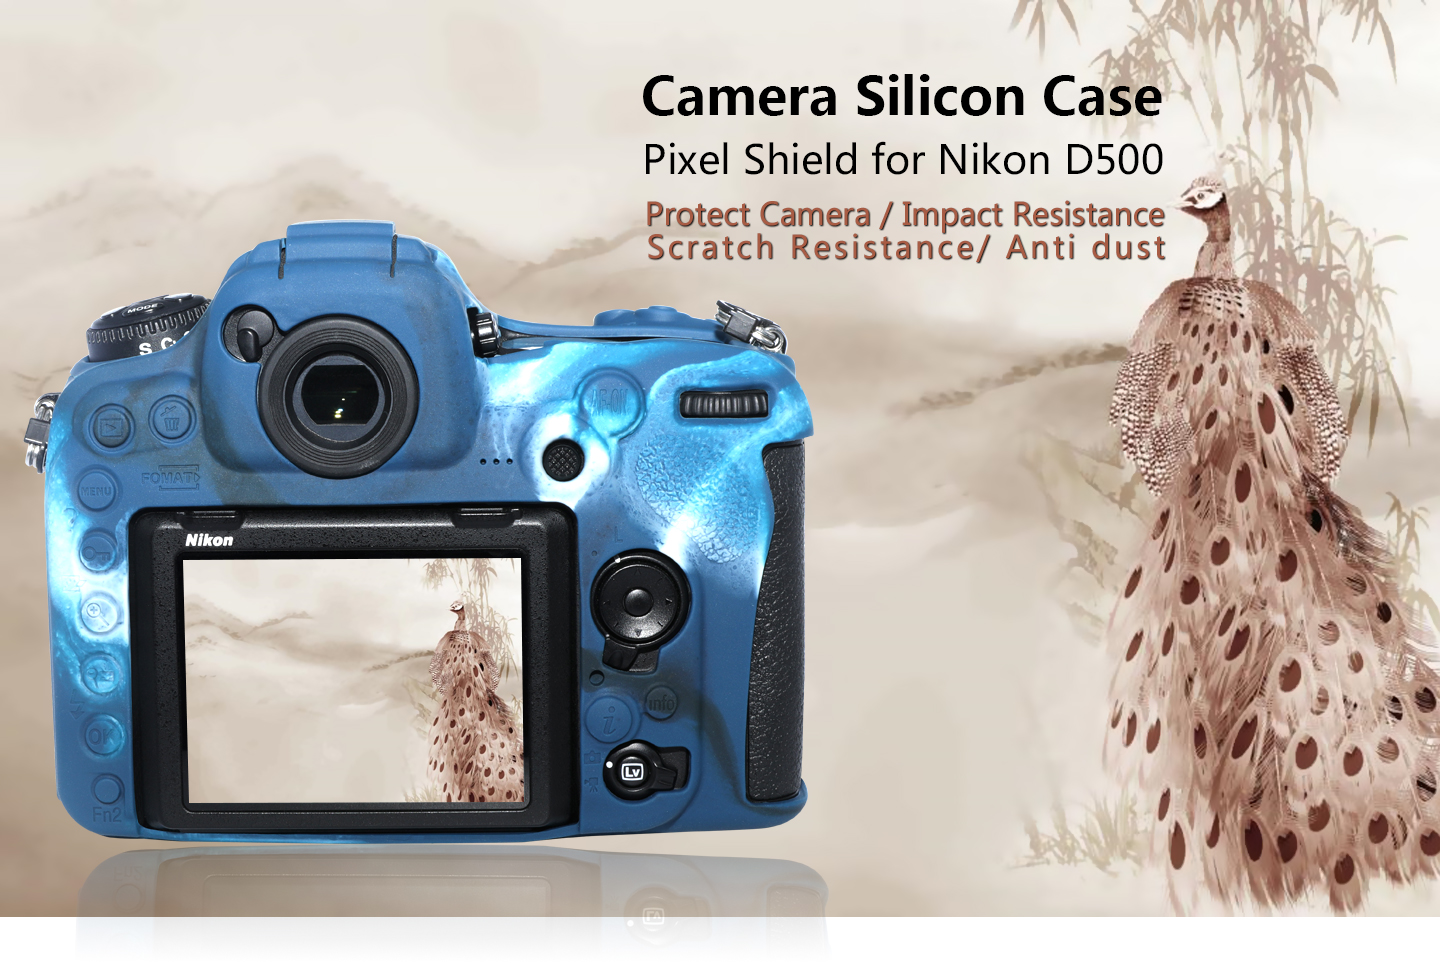 Camera Silicon Case, Pixel Shield for Nikon D500